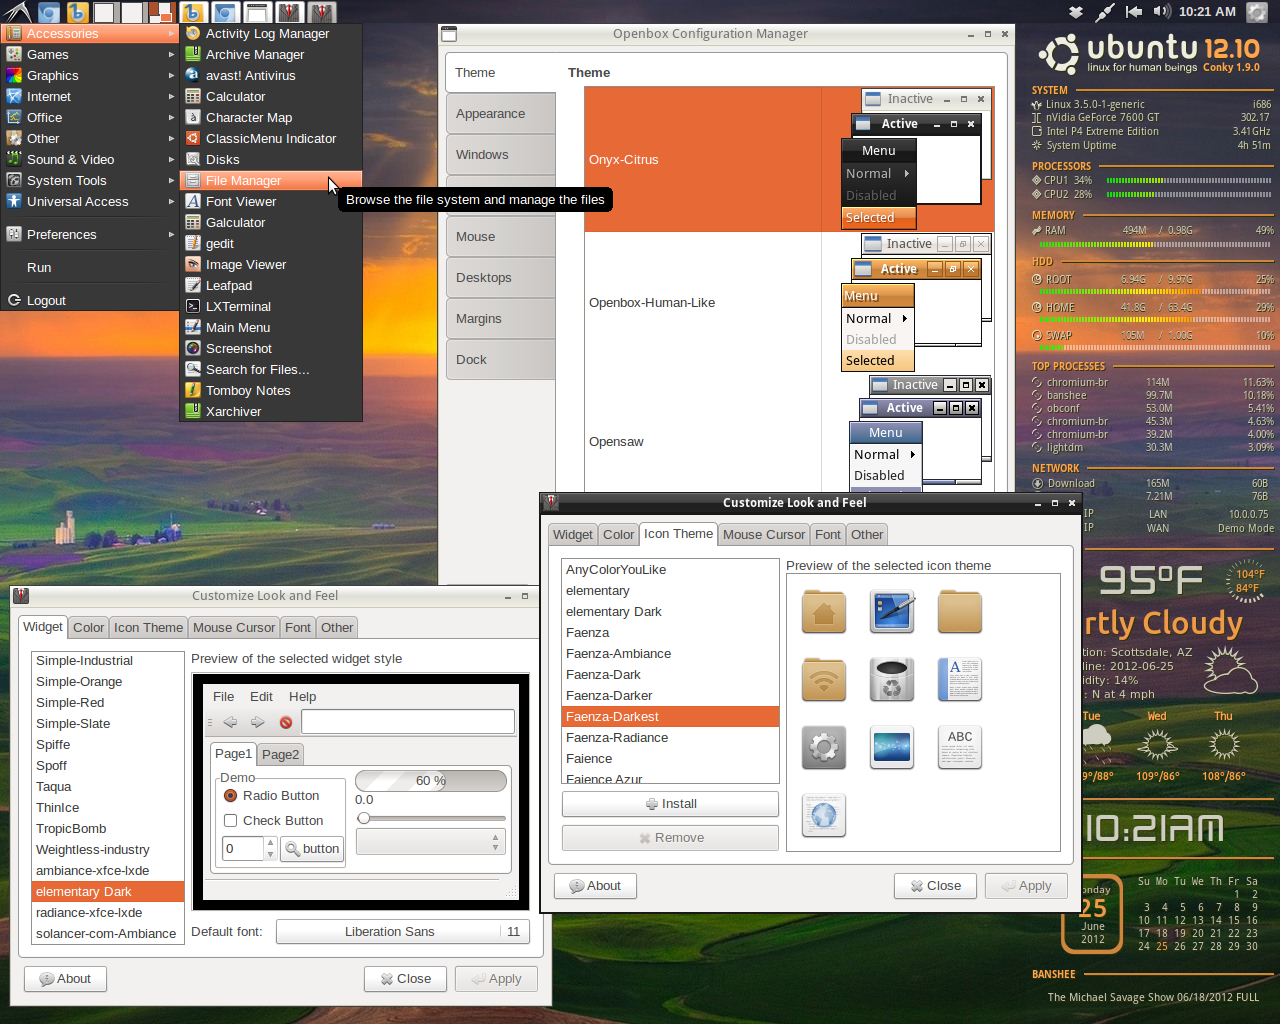 vindsl-desktop-25-jun-2012-1.png